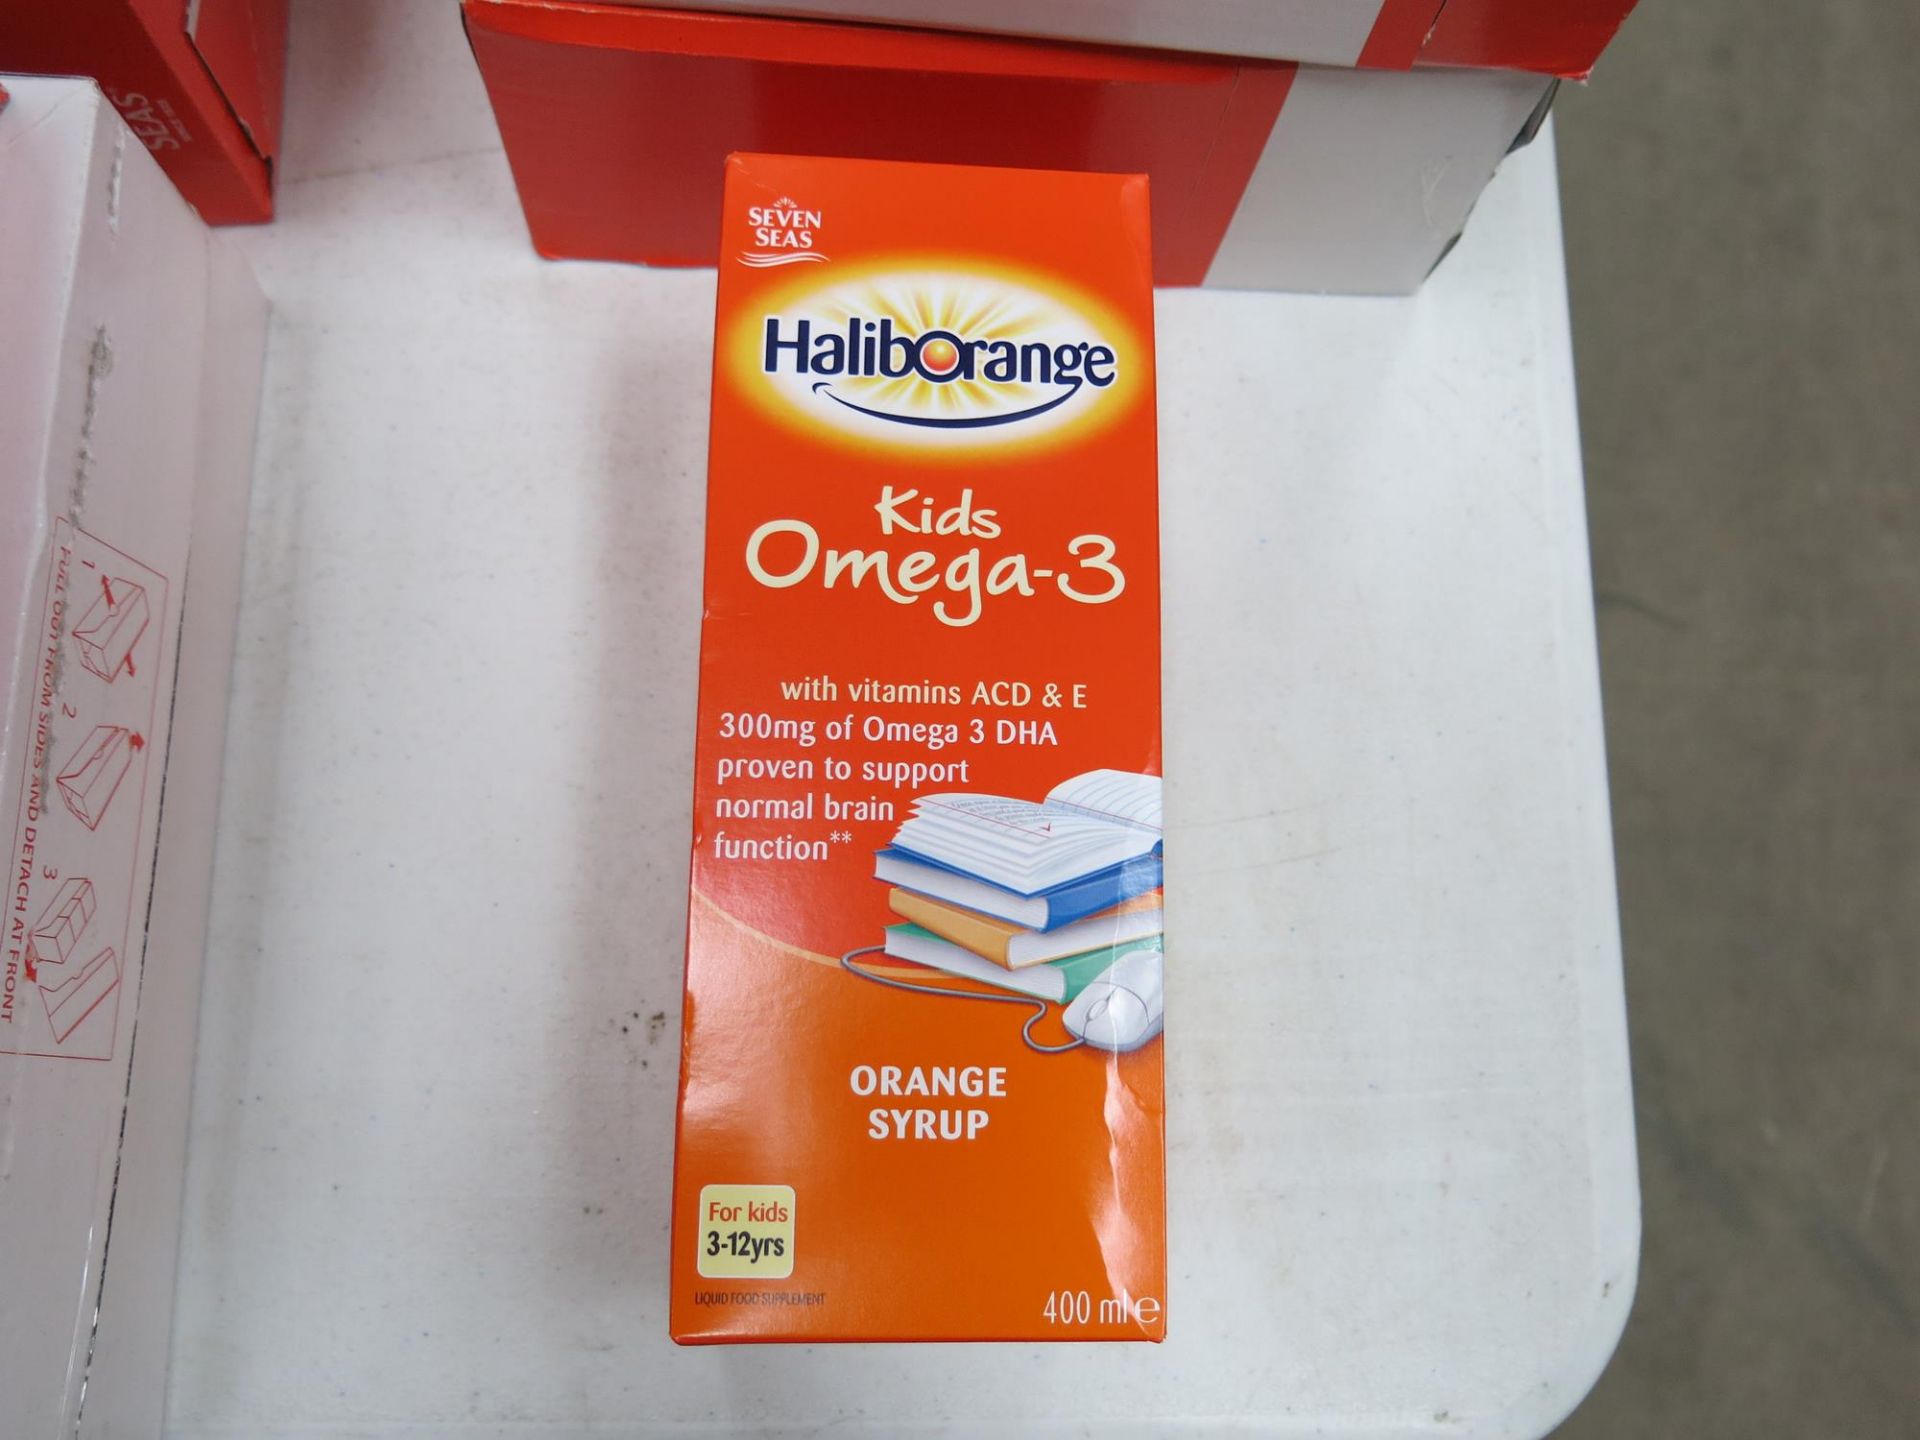 12 x Haliborange Kids Omega 3 Orange Syrup (12 x Bottles pet lot) - Image 2 of 2